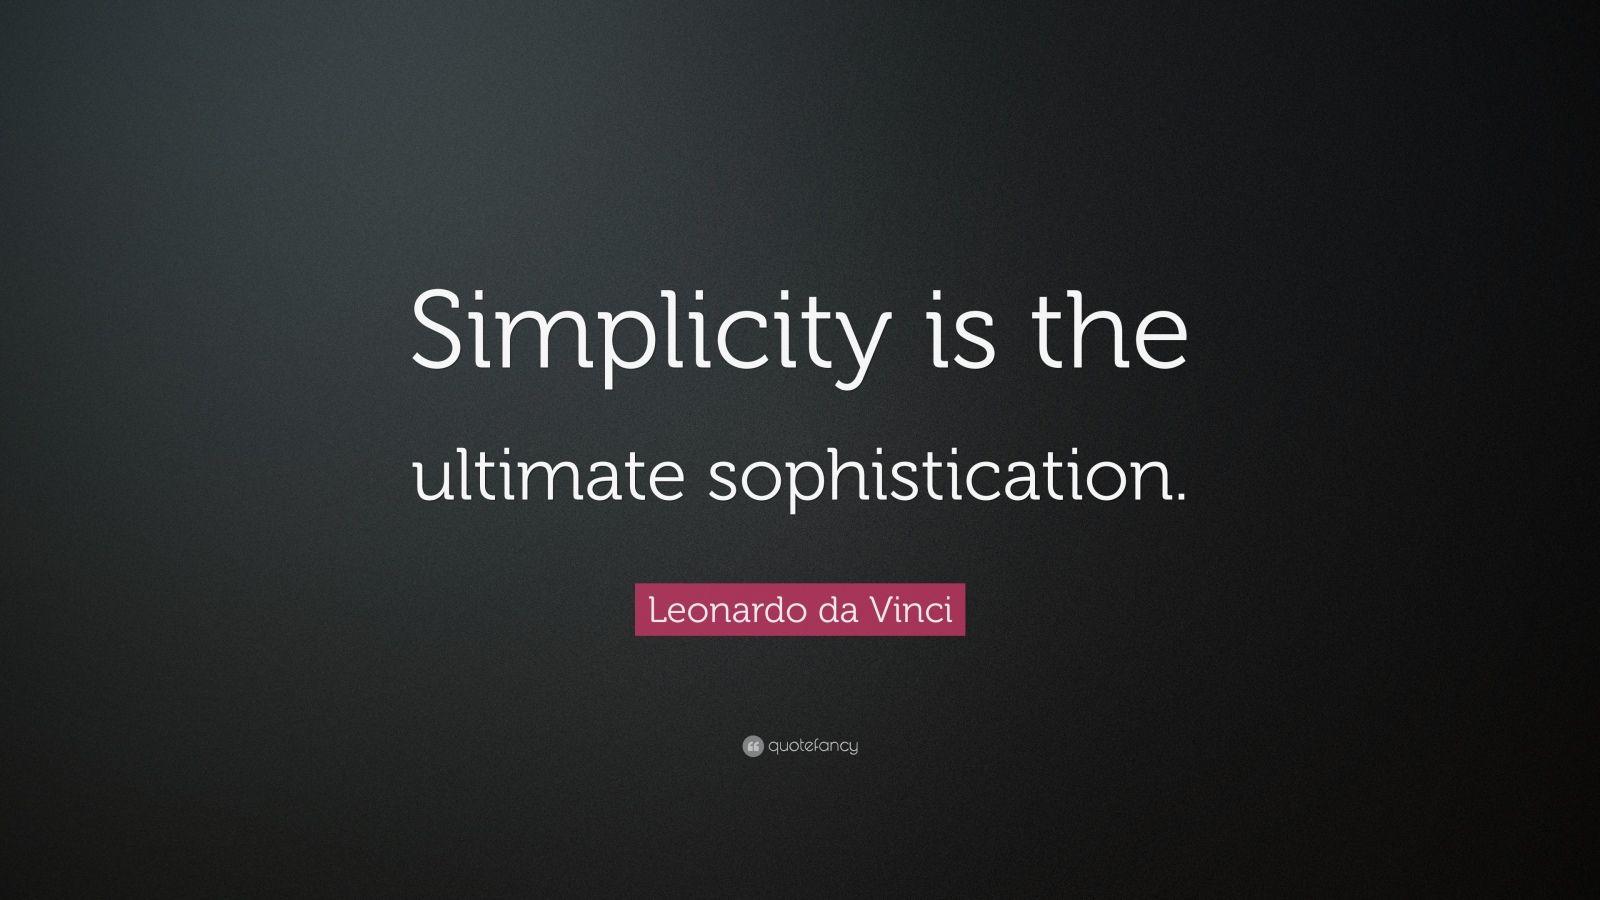 Leonardo da Vinci Quote: “Simplicity is the ultimate